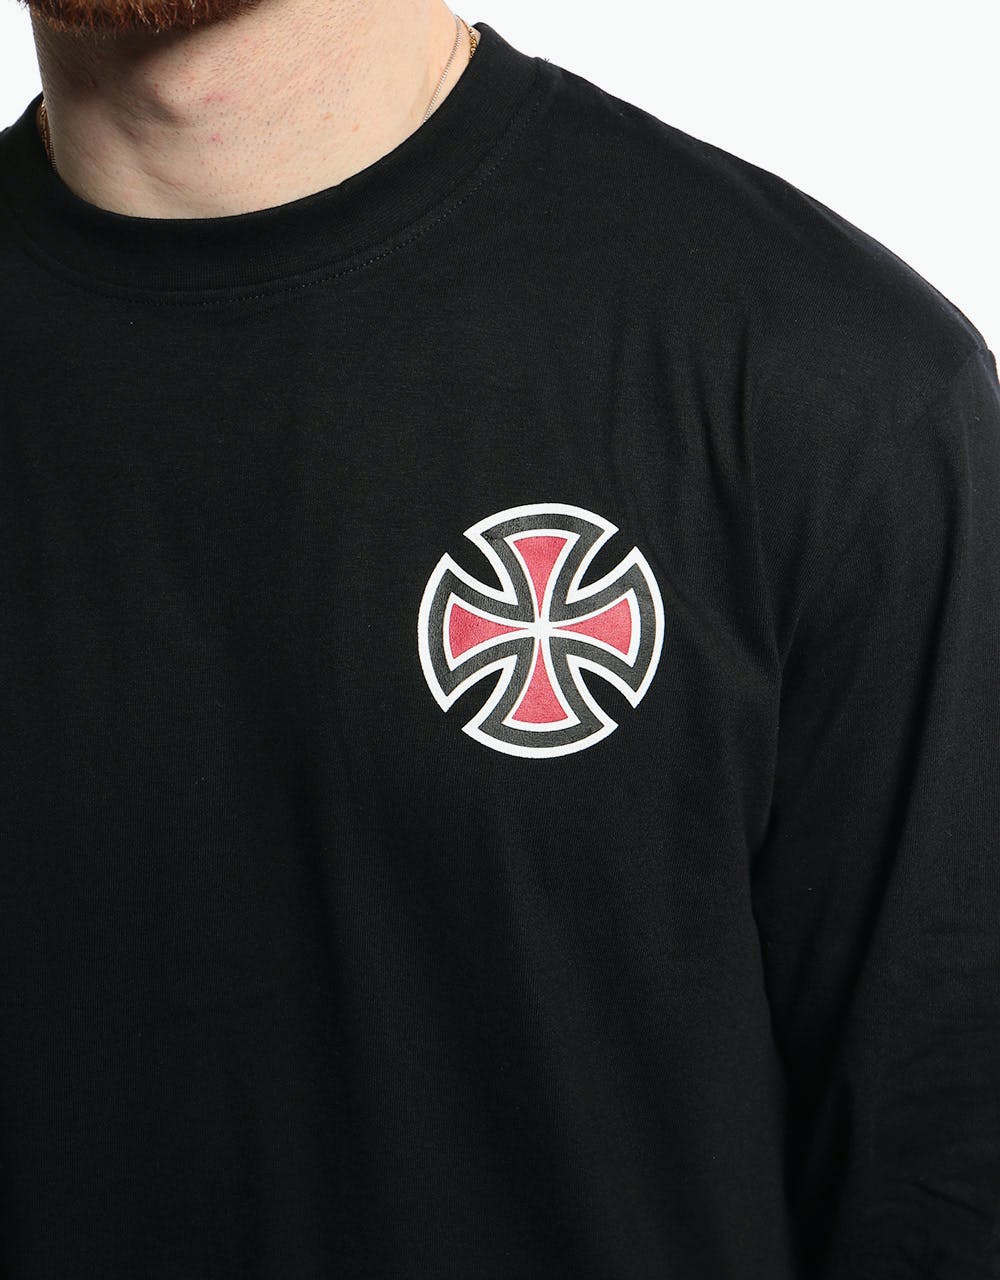 Independent Shear L/S T-Shirt - Black